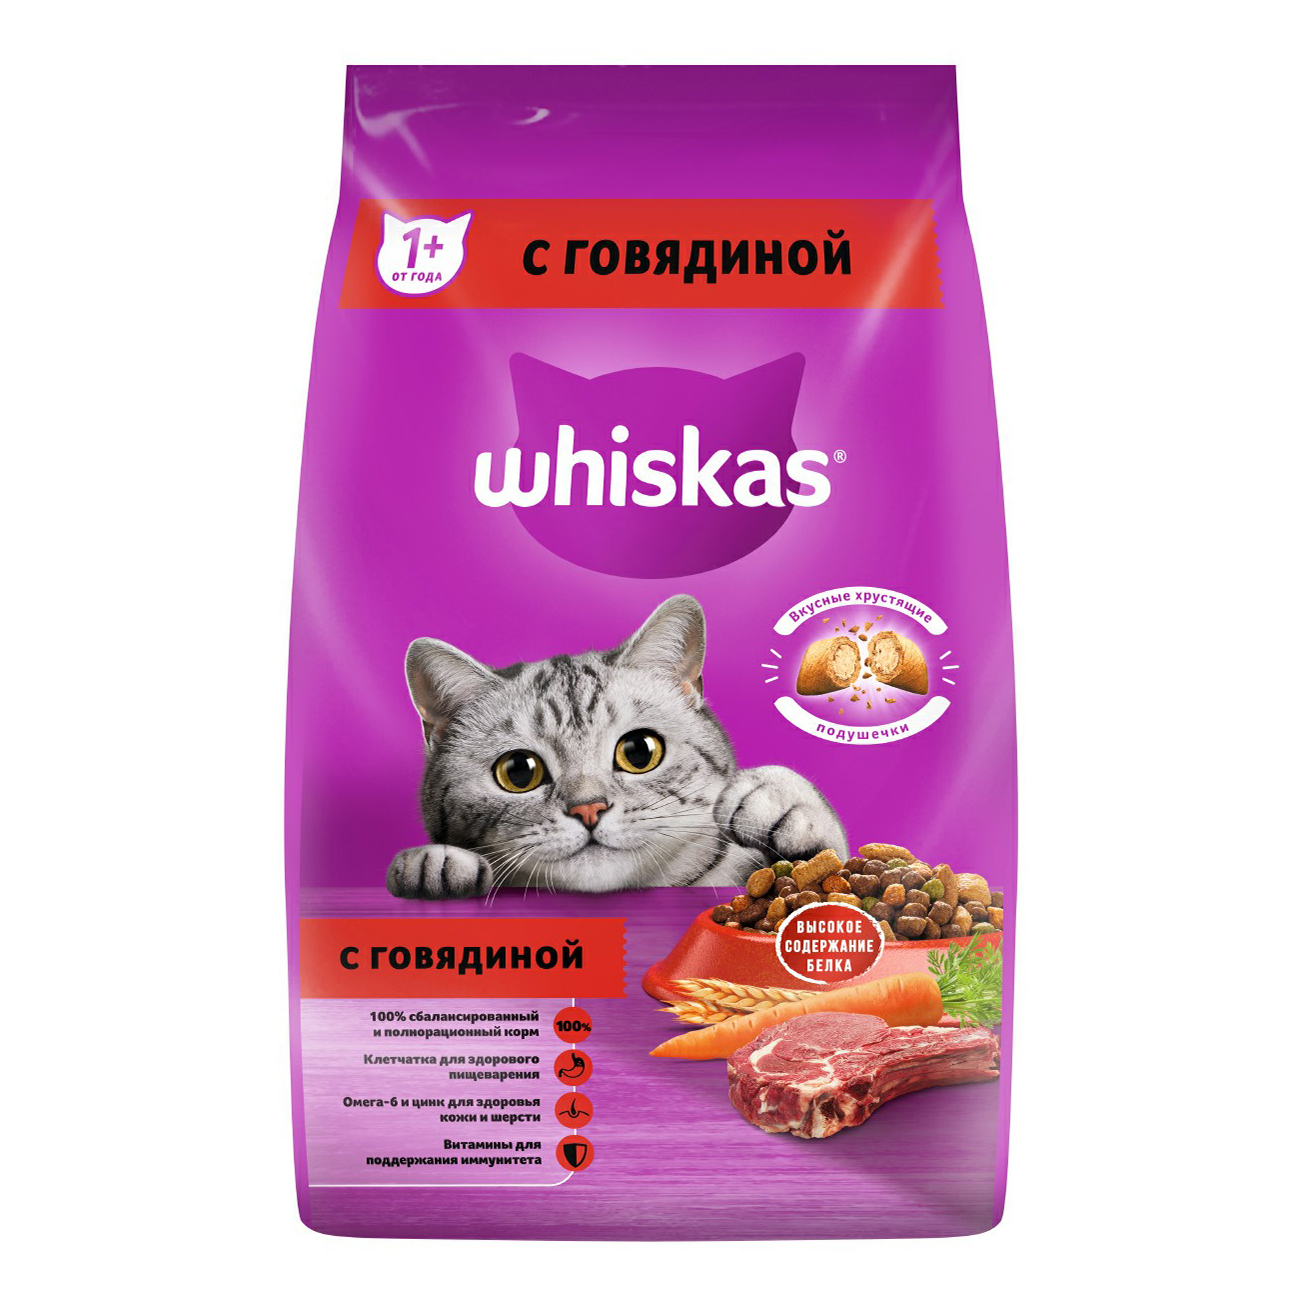 фото Сухой корм whiskas для кошек подушечки с говядиной 1,9 кг